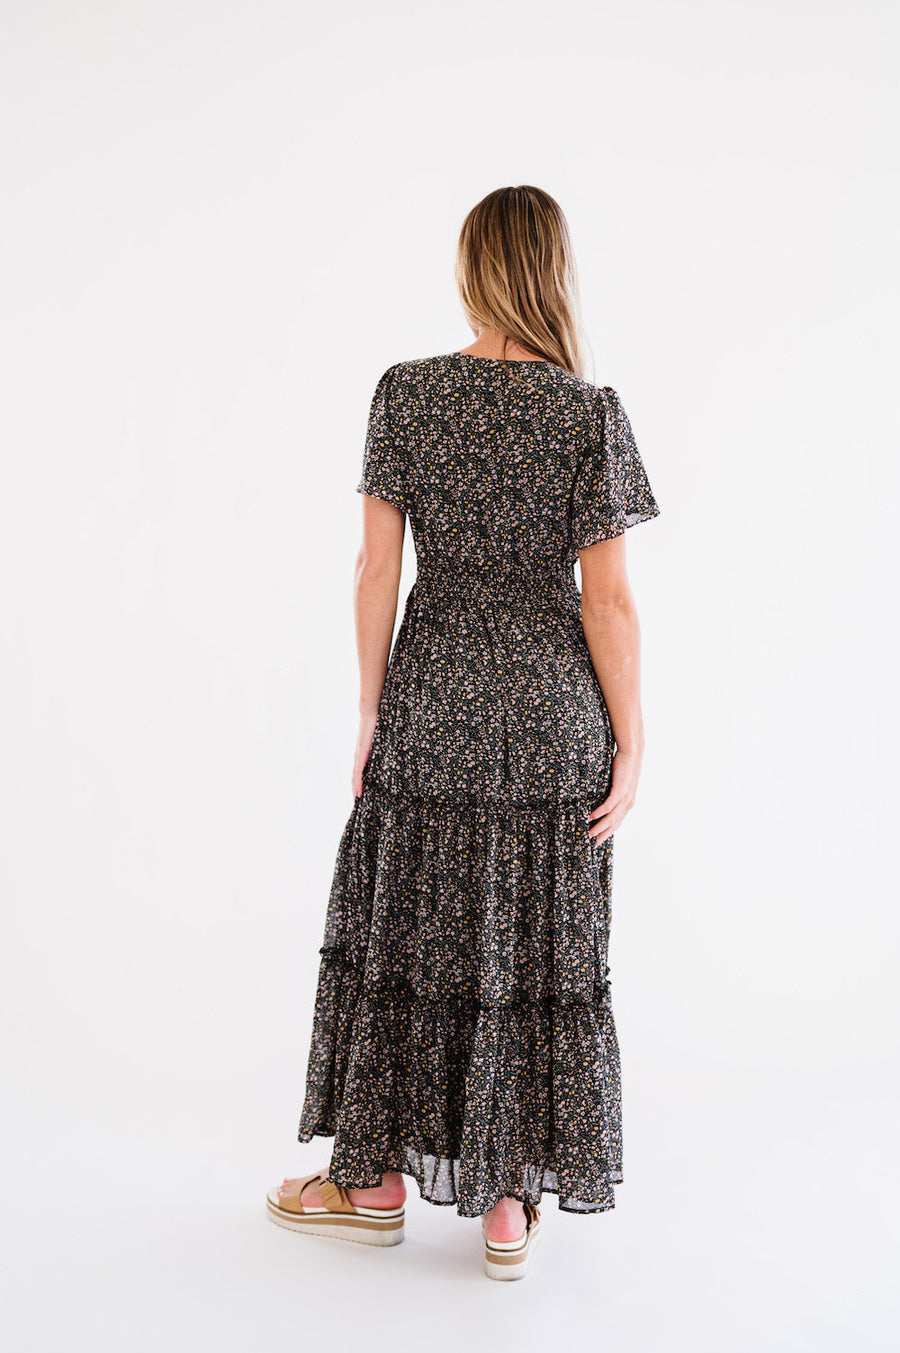 Flowy black dress with floral print